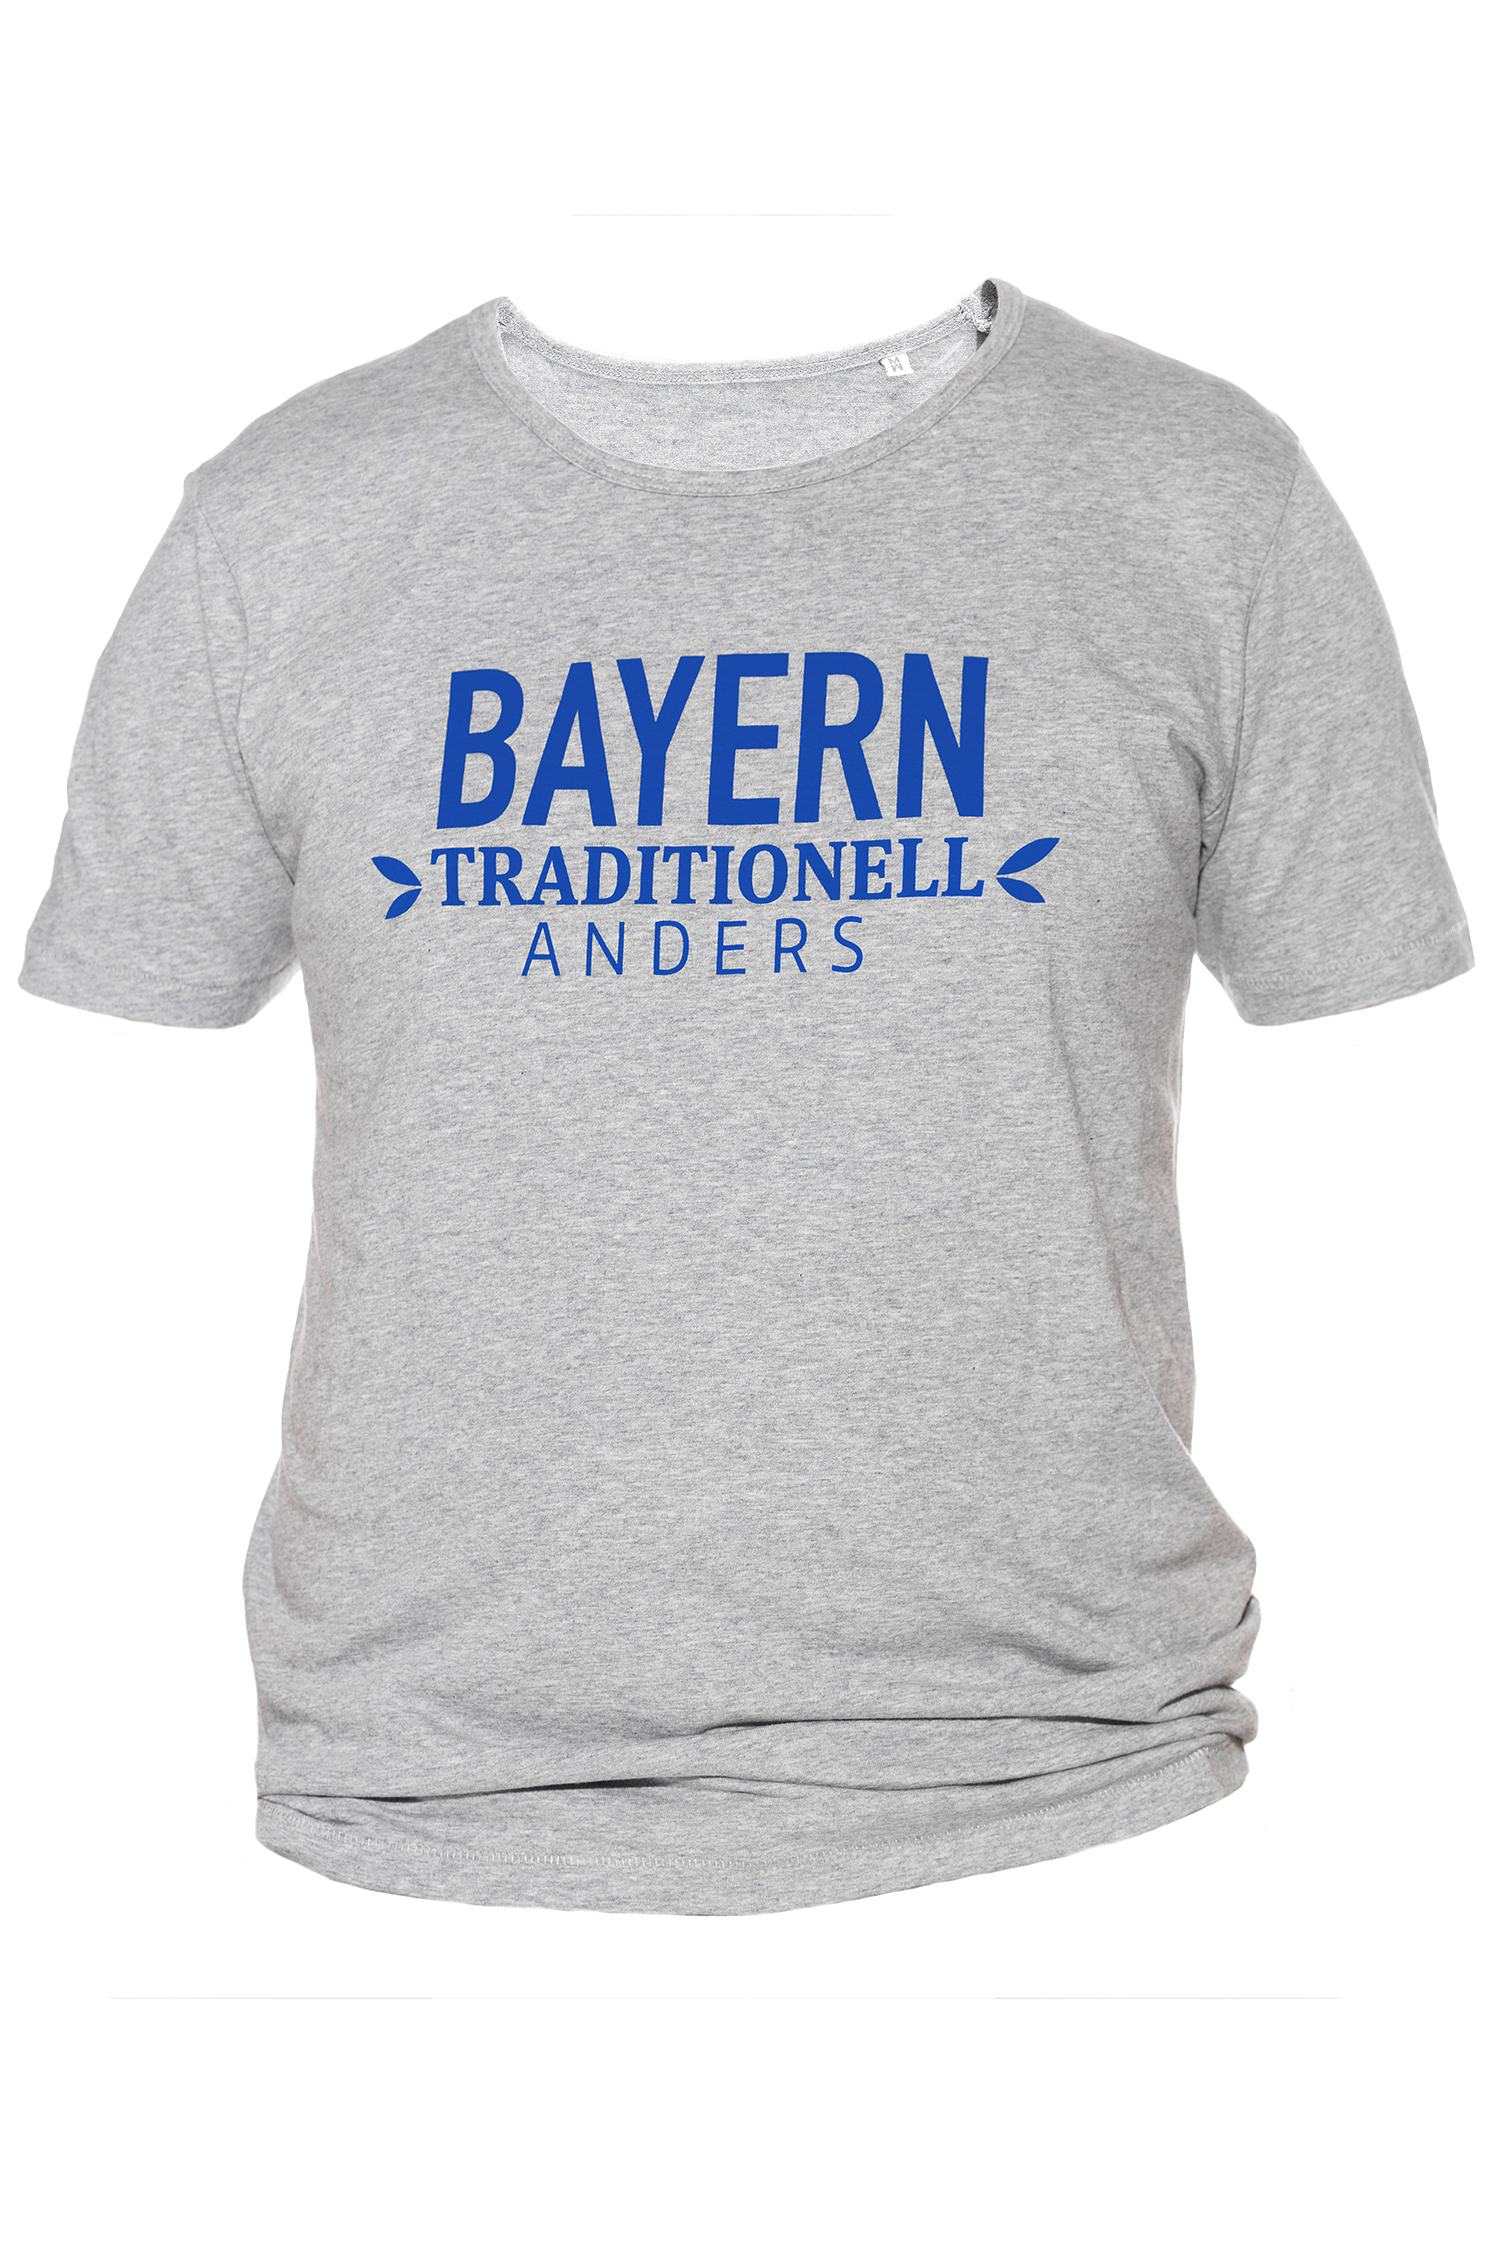 T-Shirt Bayern traditionell anders XXL | grau / blau